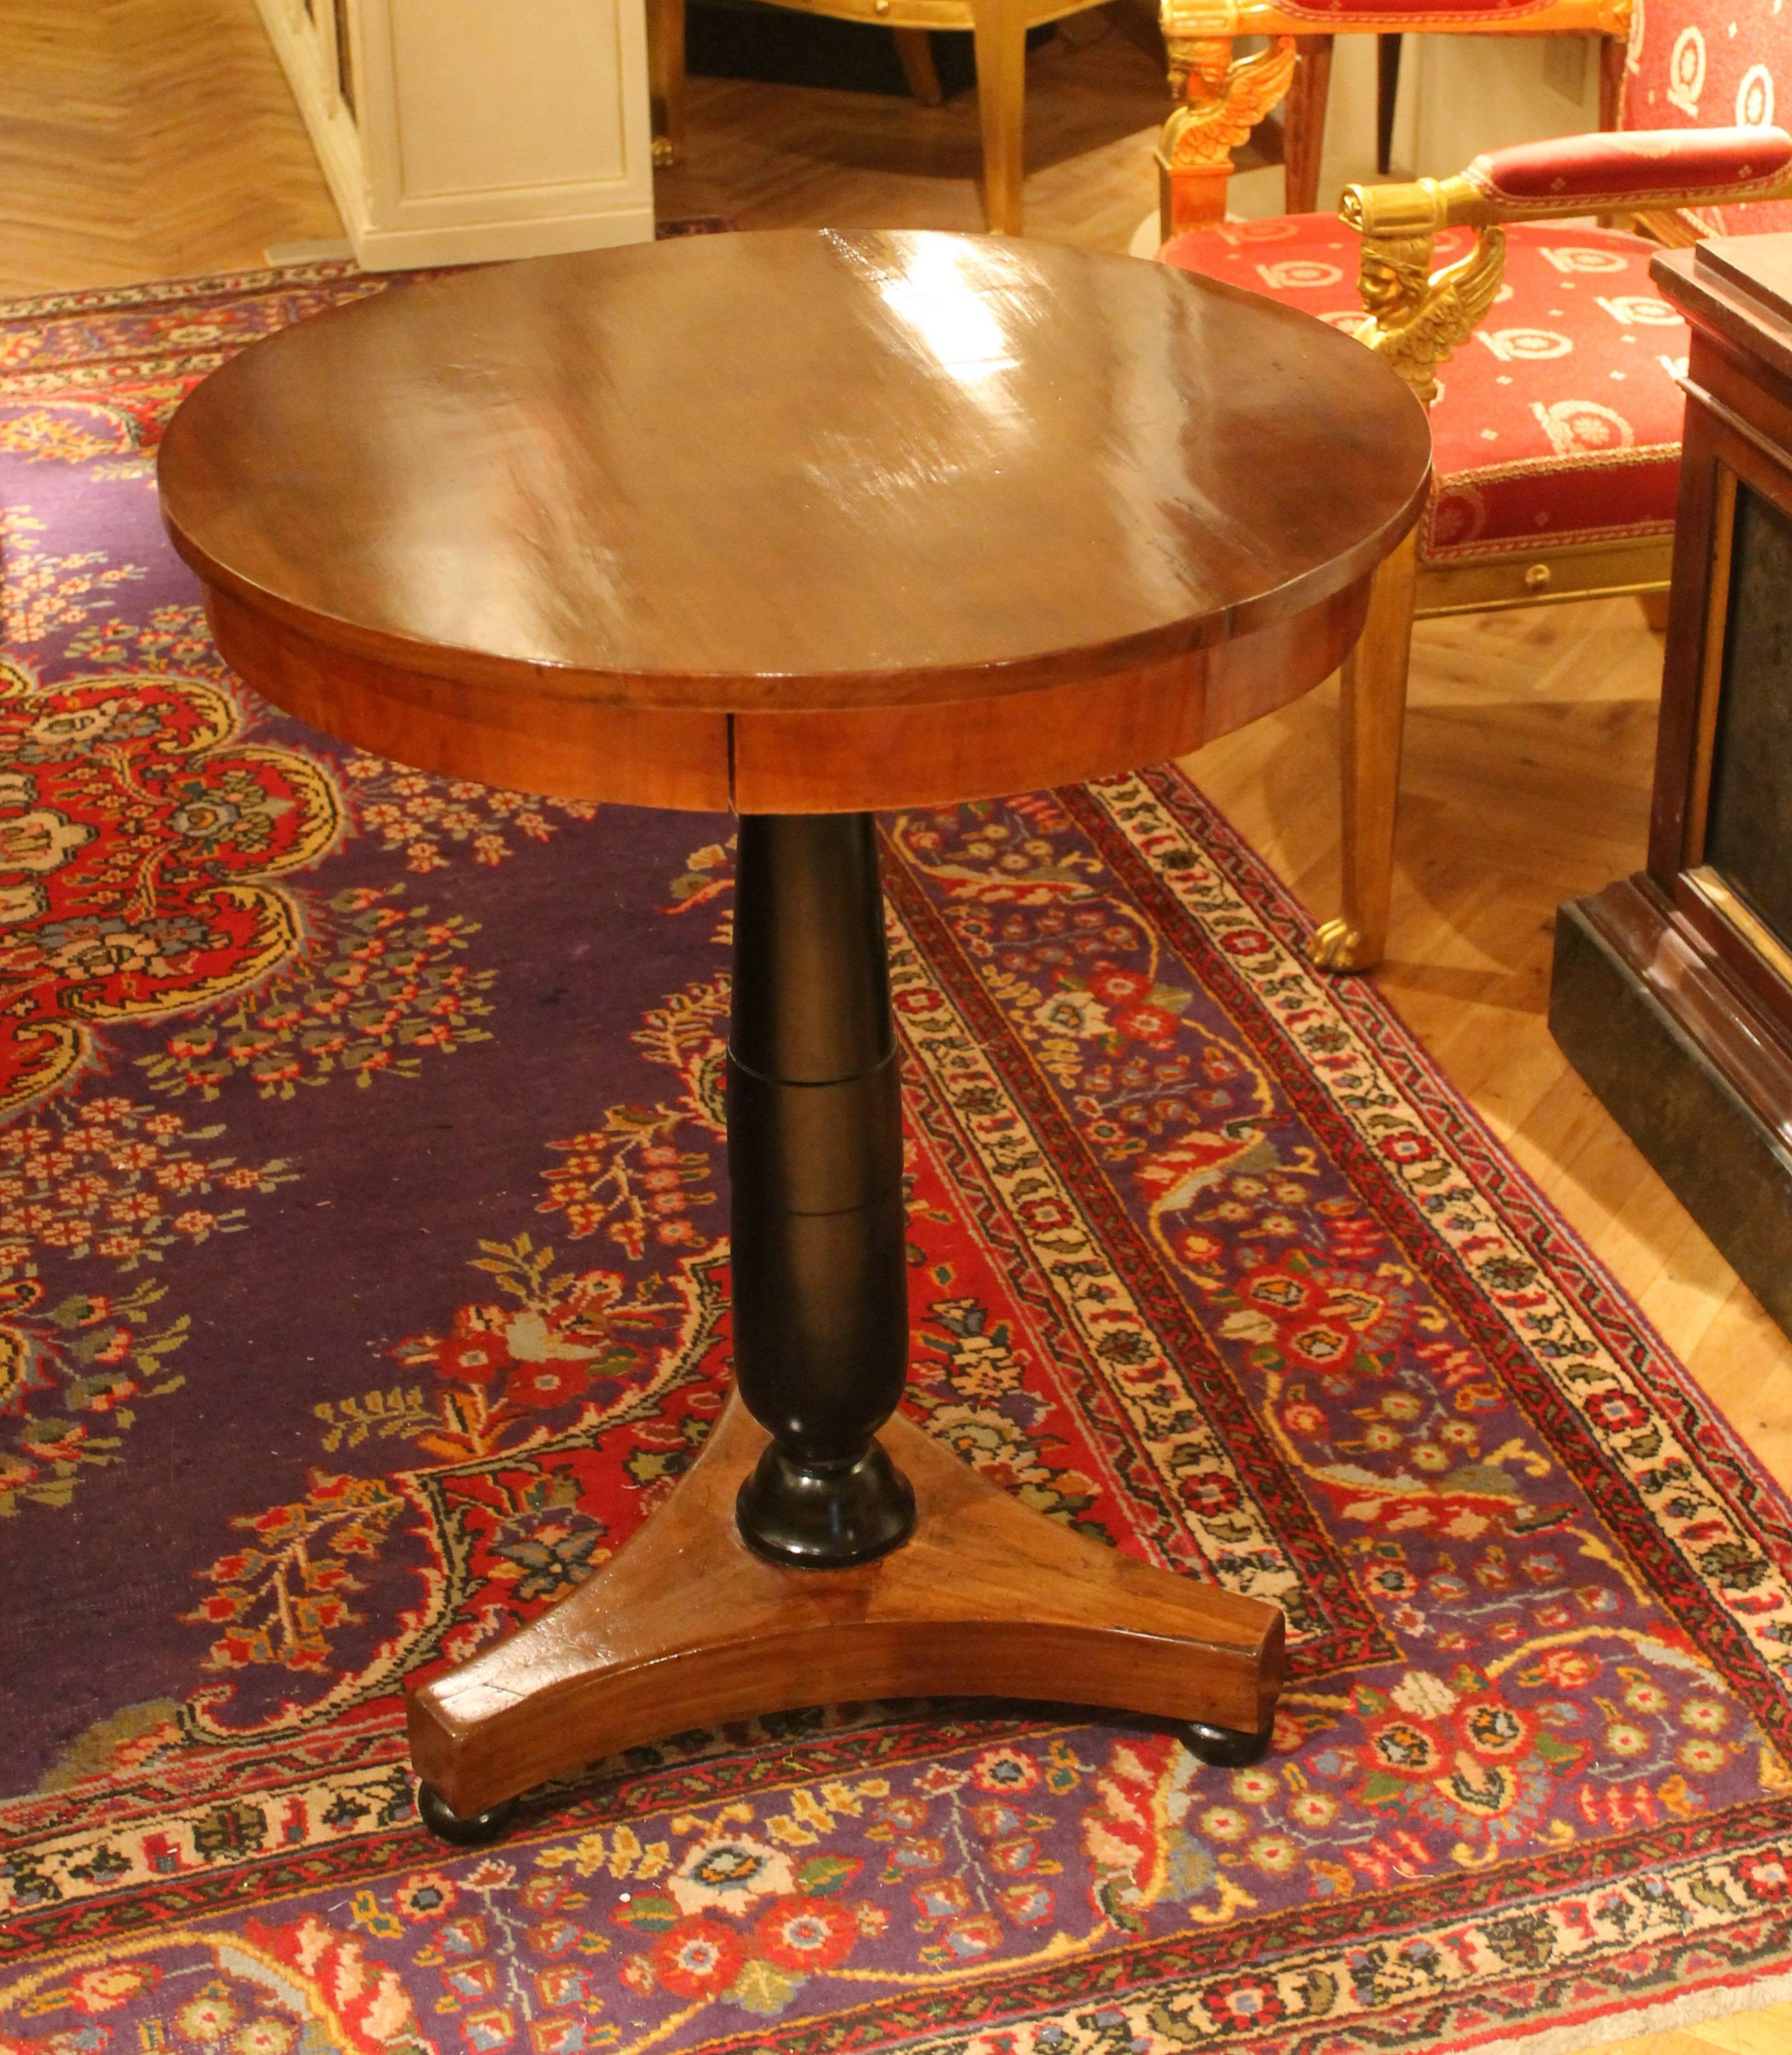 19th Century Italian Empire Period Round Pedestal Centre Table in Walnut and Ebonized Wood